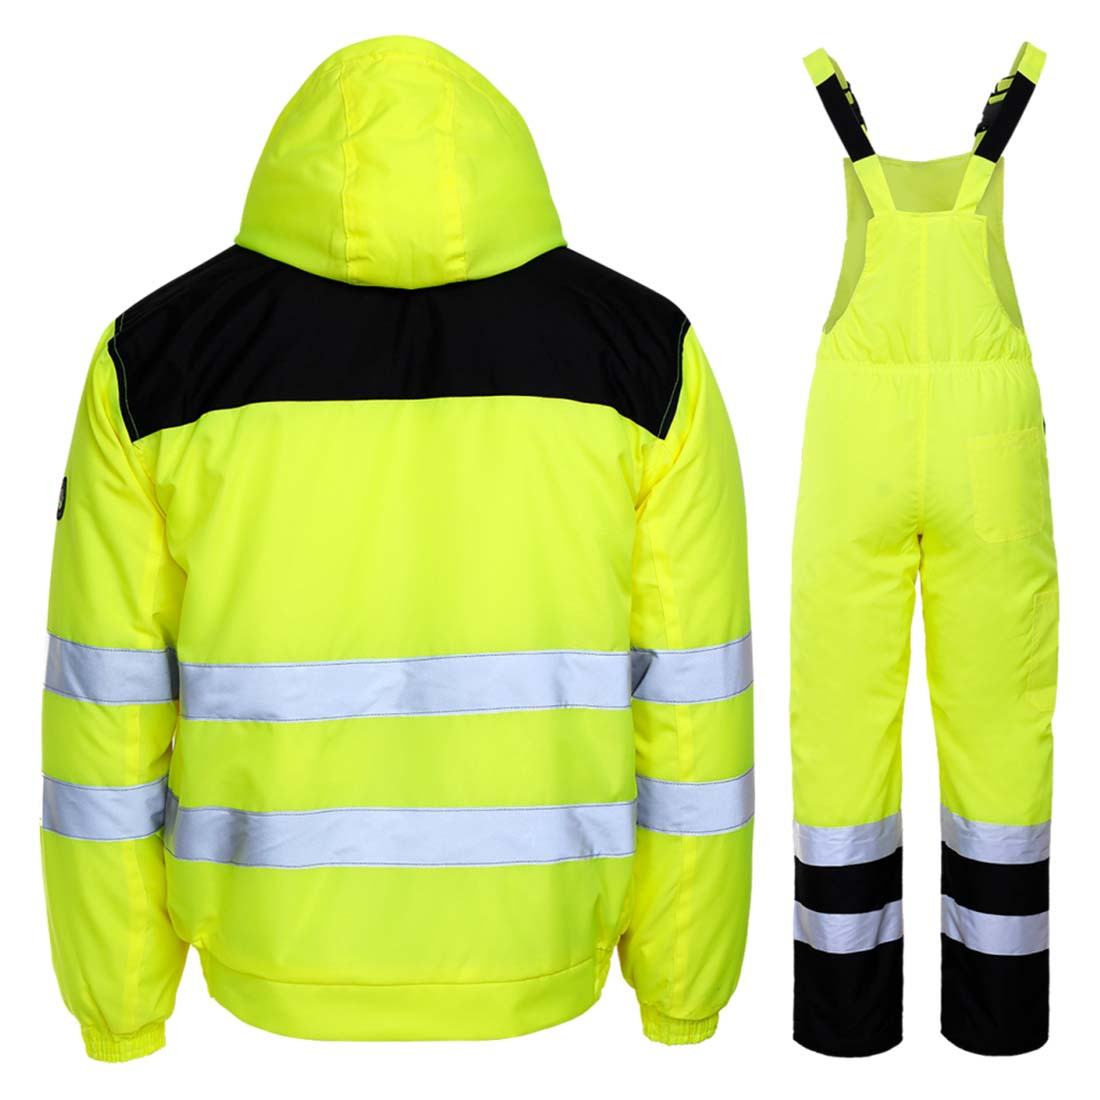 Collins Winter HiVis Suit - Safetywear